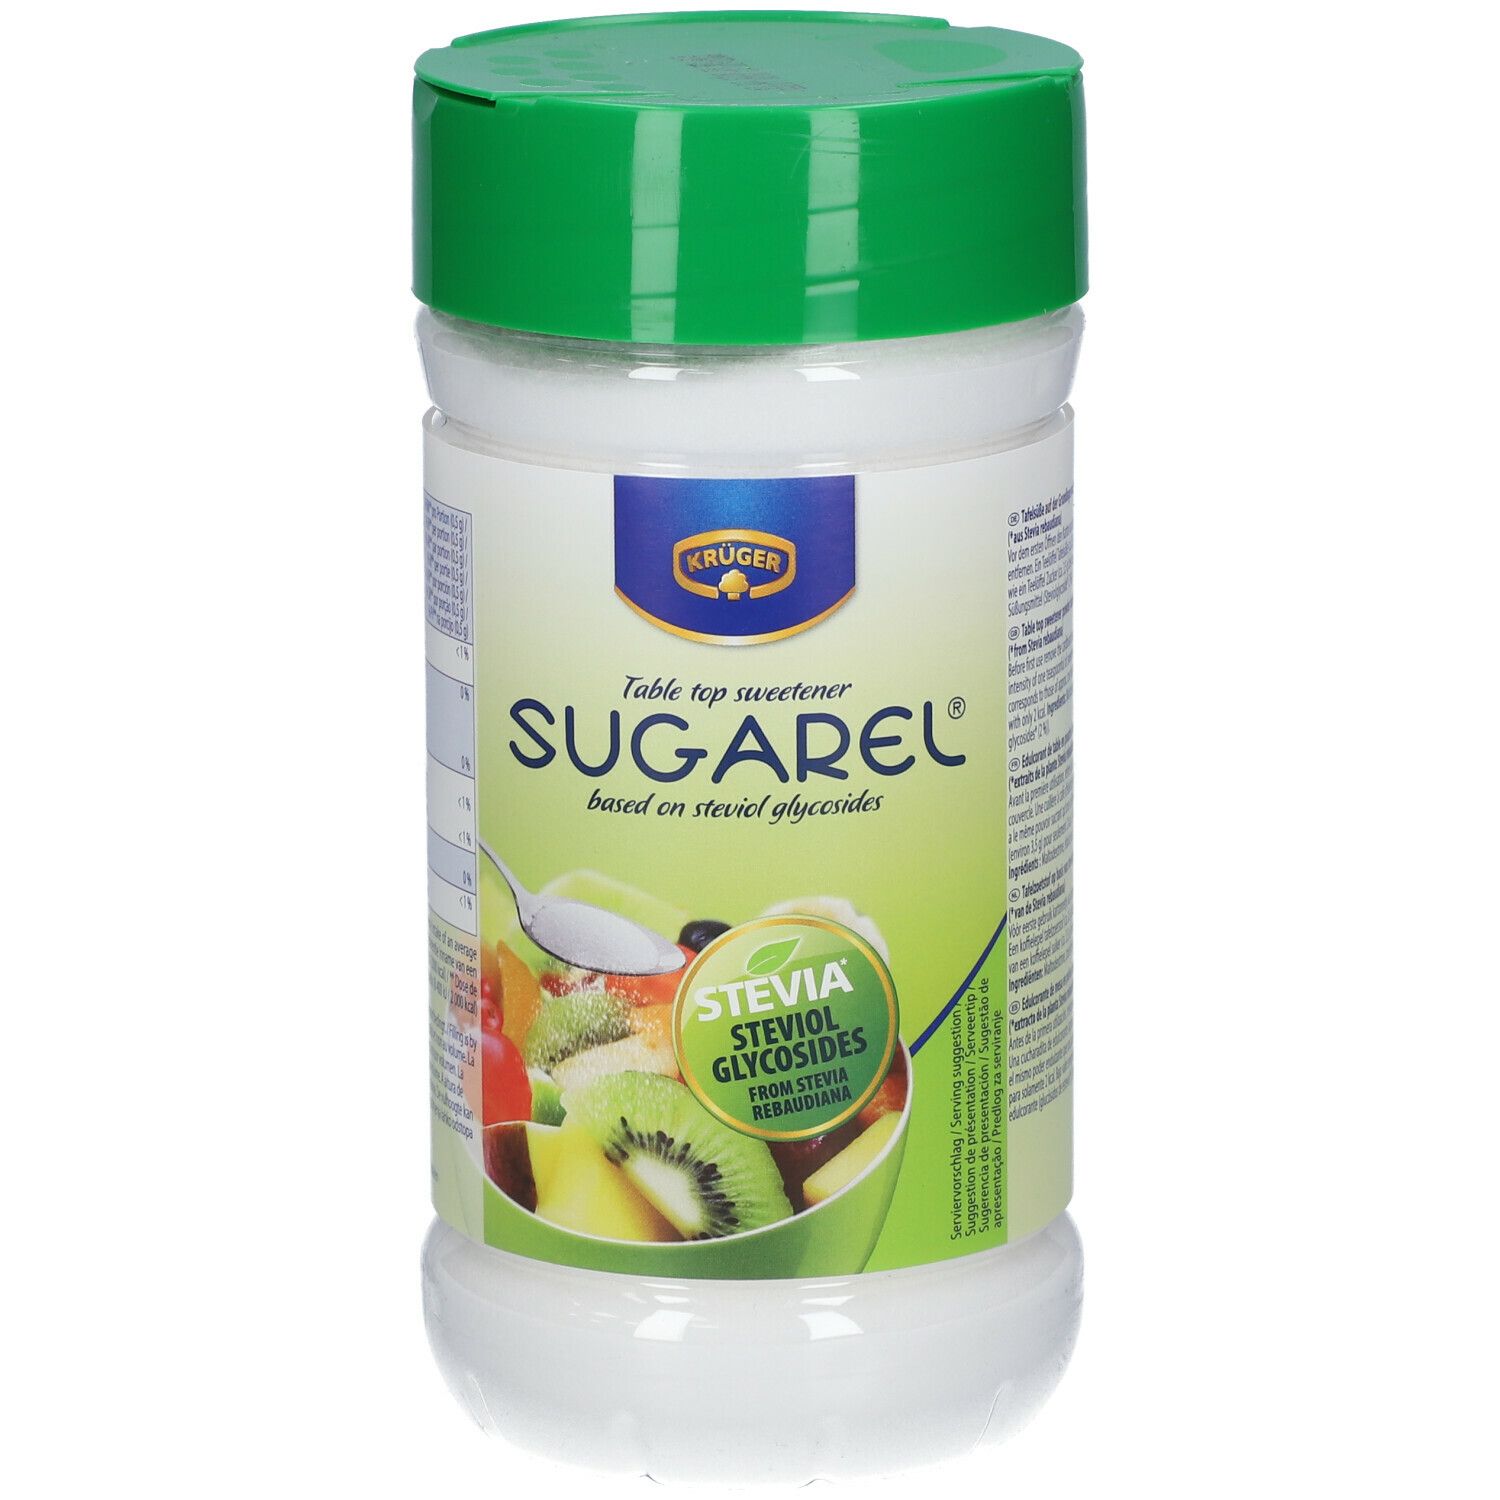 Sugarel Stevia Edulcorant